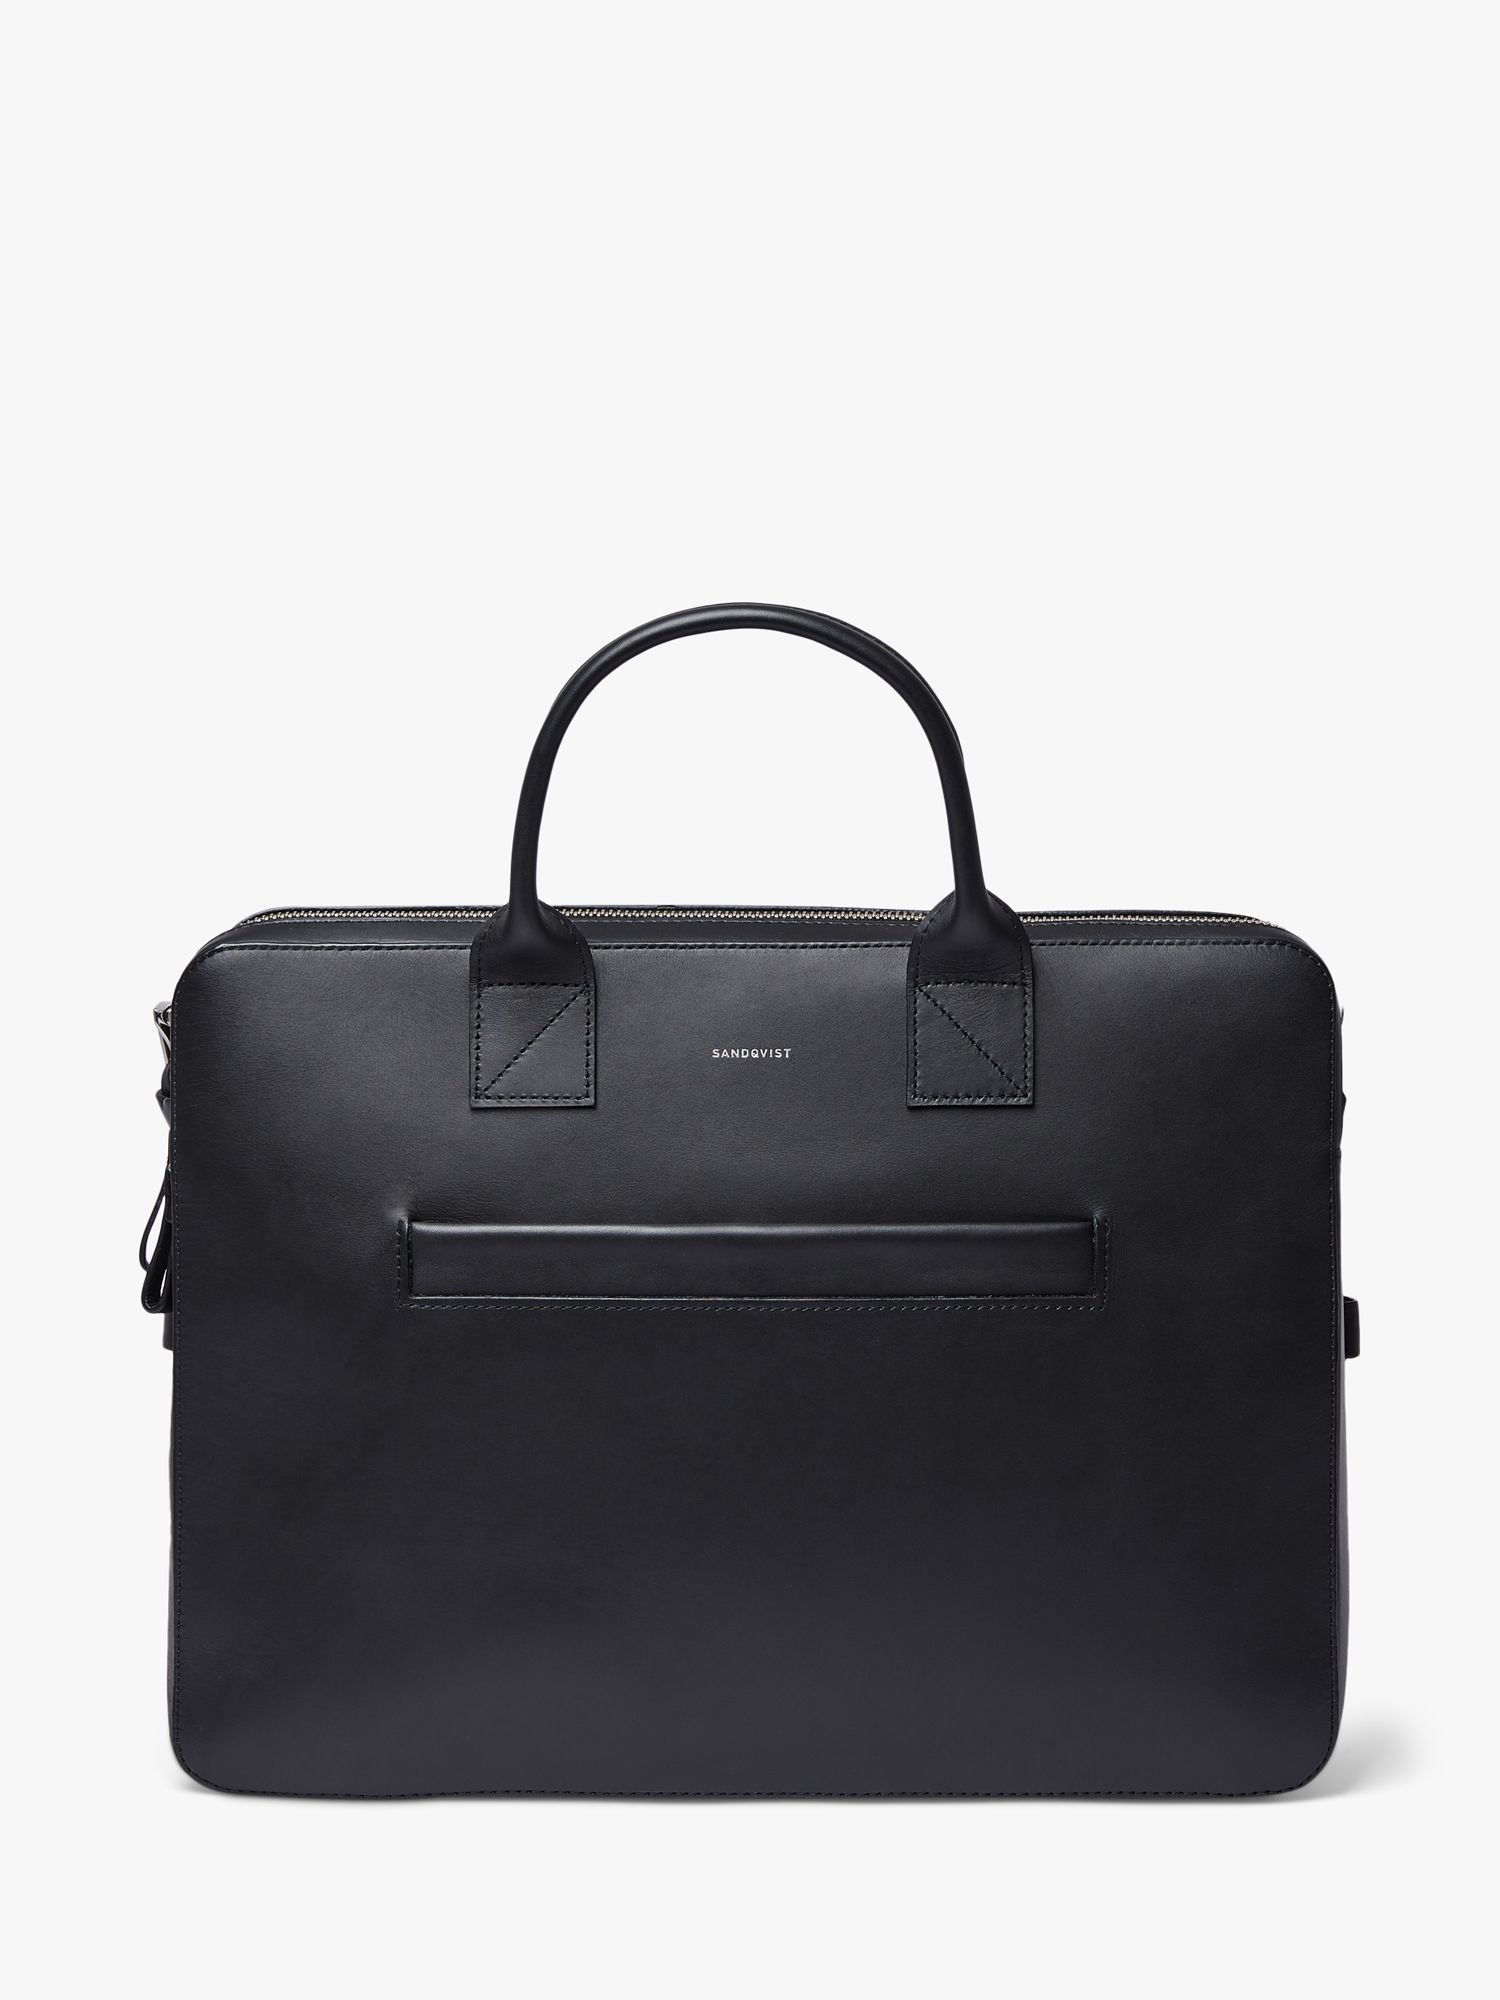 Sandqvist Seth Leather Briefcase, Black at John Lewis & Partners